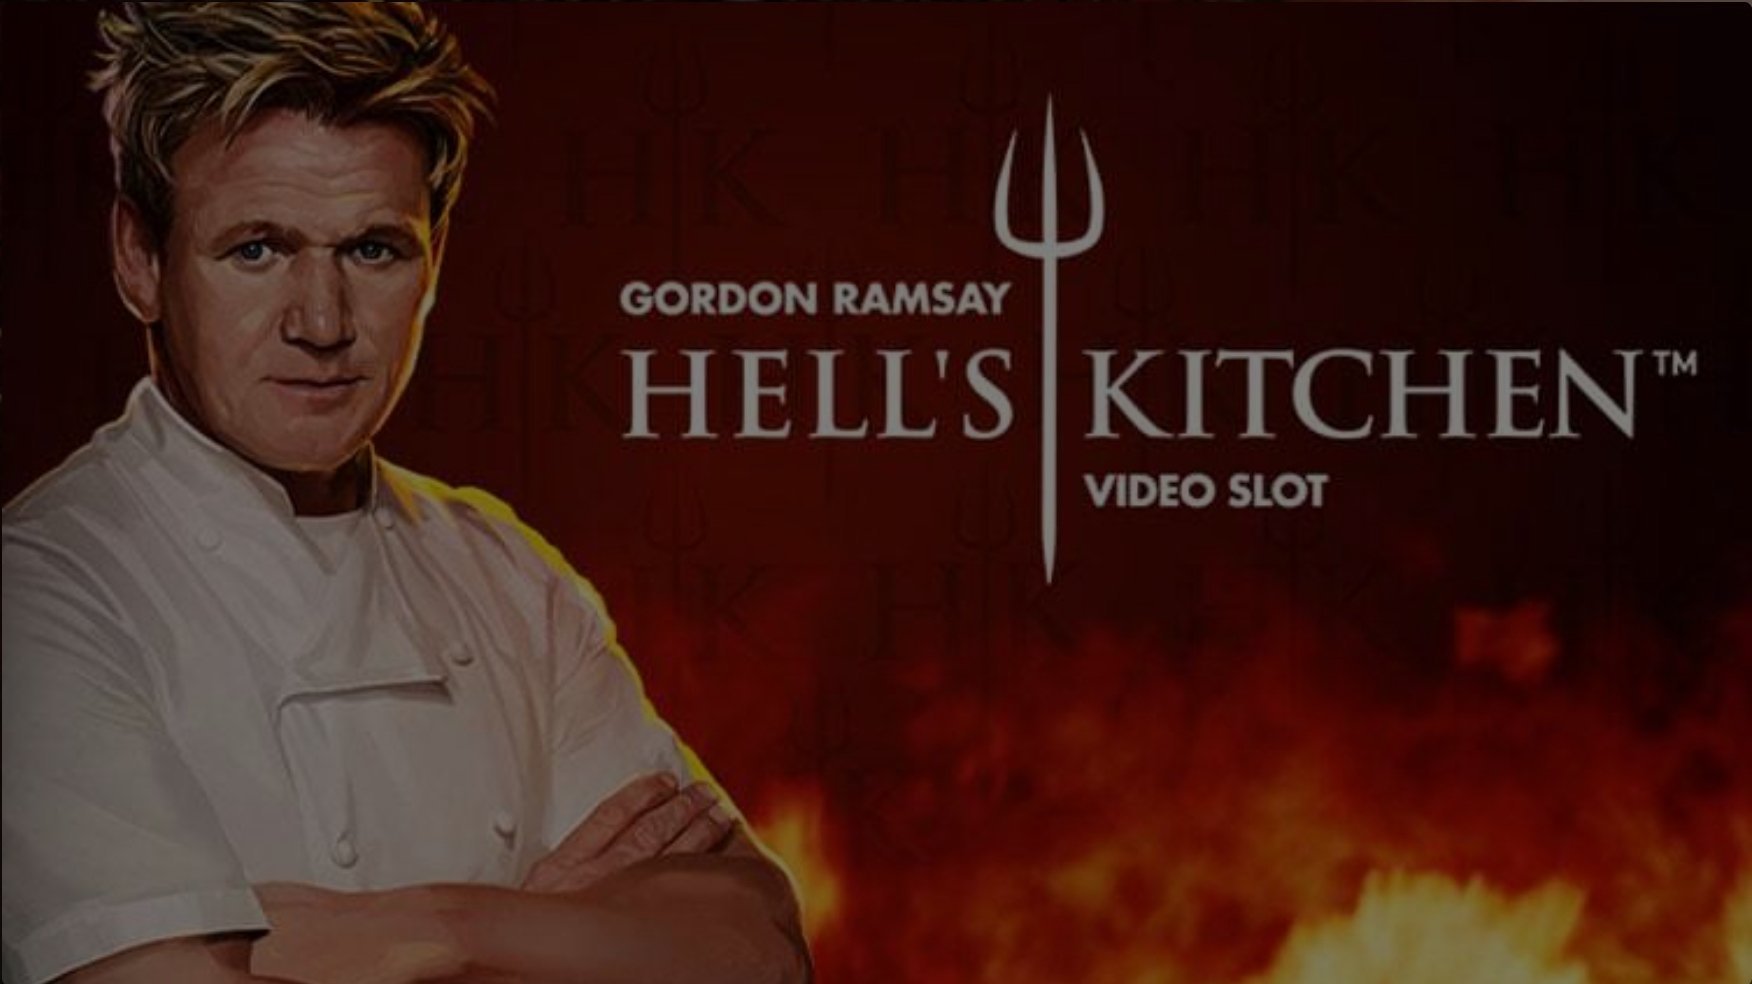 Gordon Ramsay Hell’s Kitchen demo